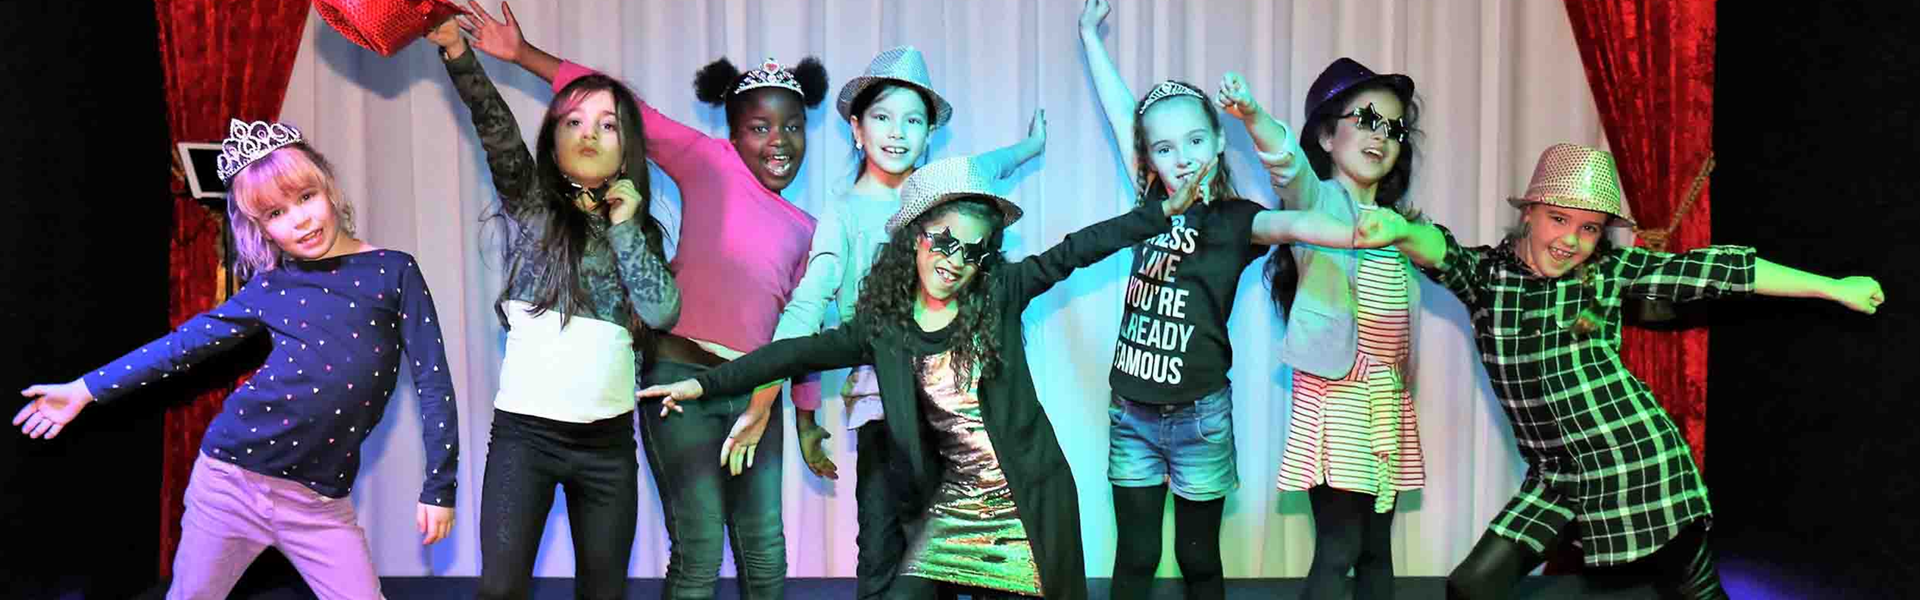 Streetdance kinderfeestje, catwalk model verjaardagsfeestje voor meisjes Almere